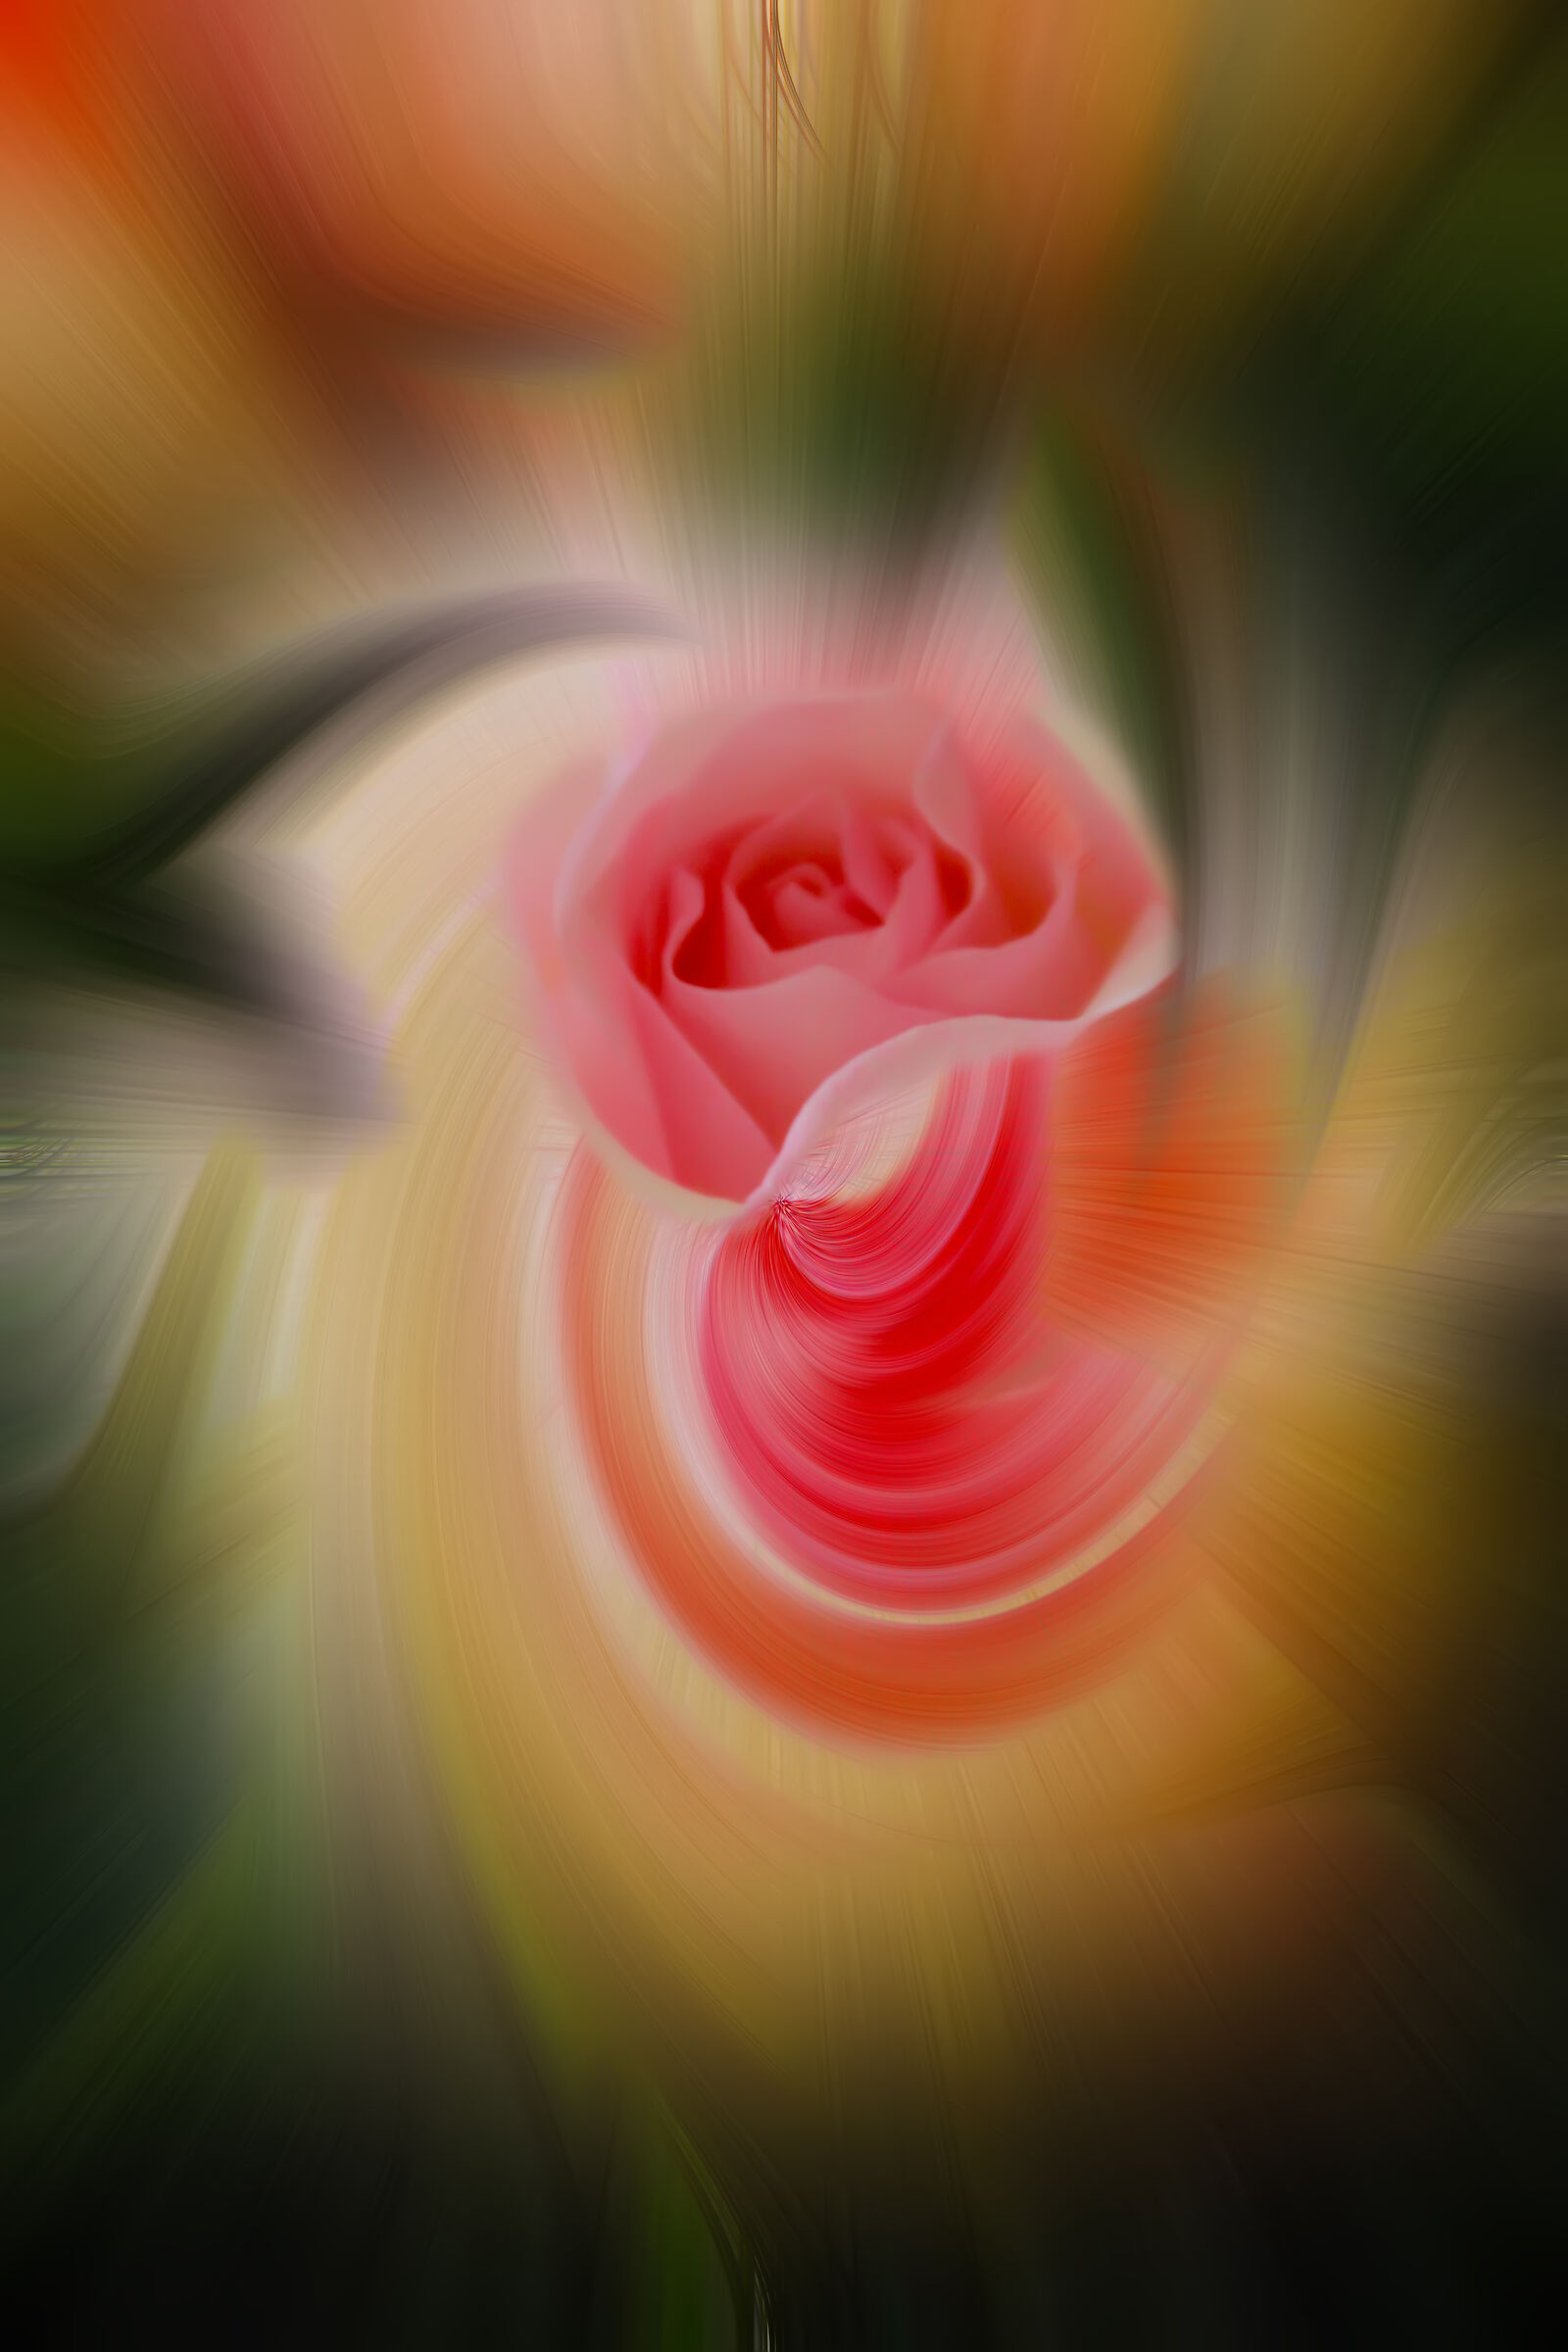 The Twirl Rose...